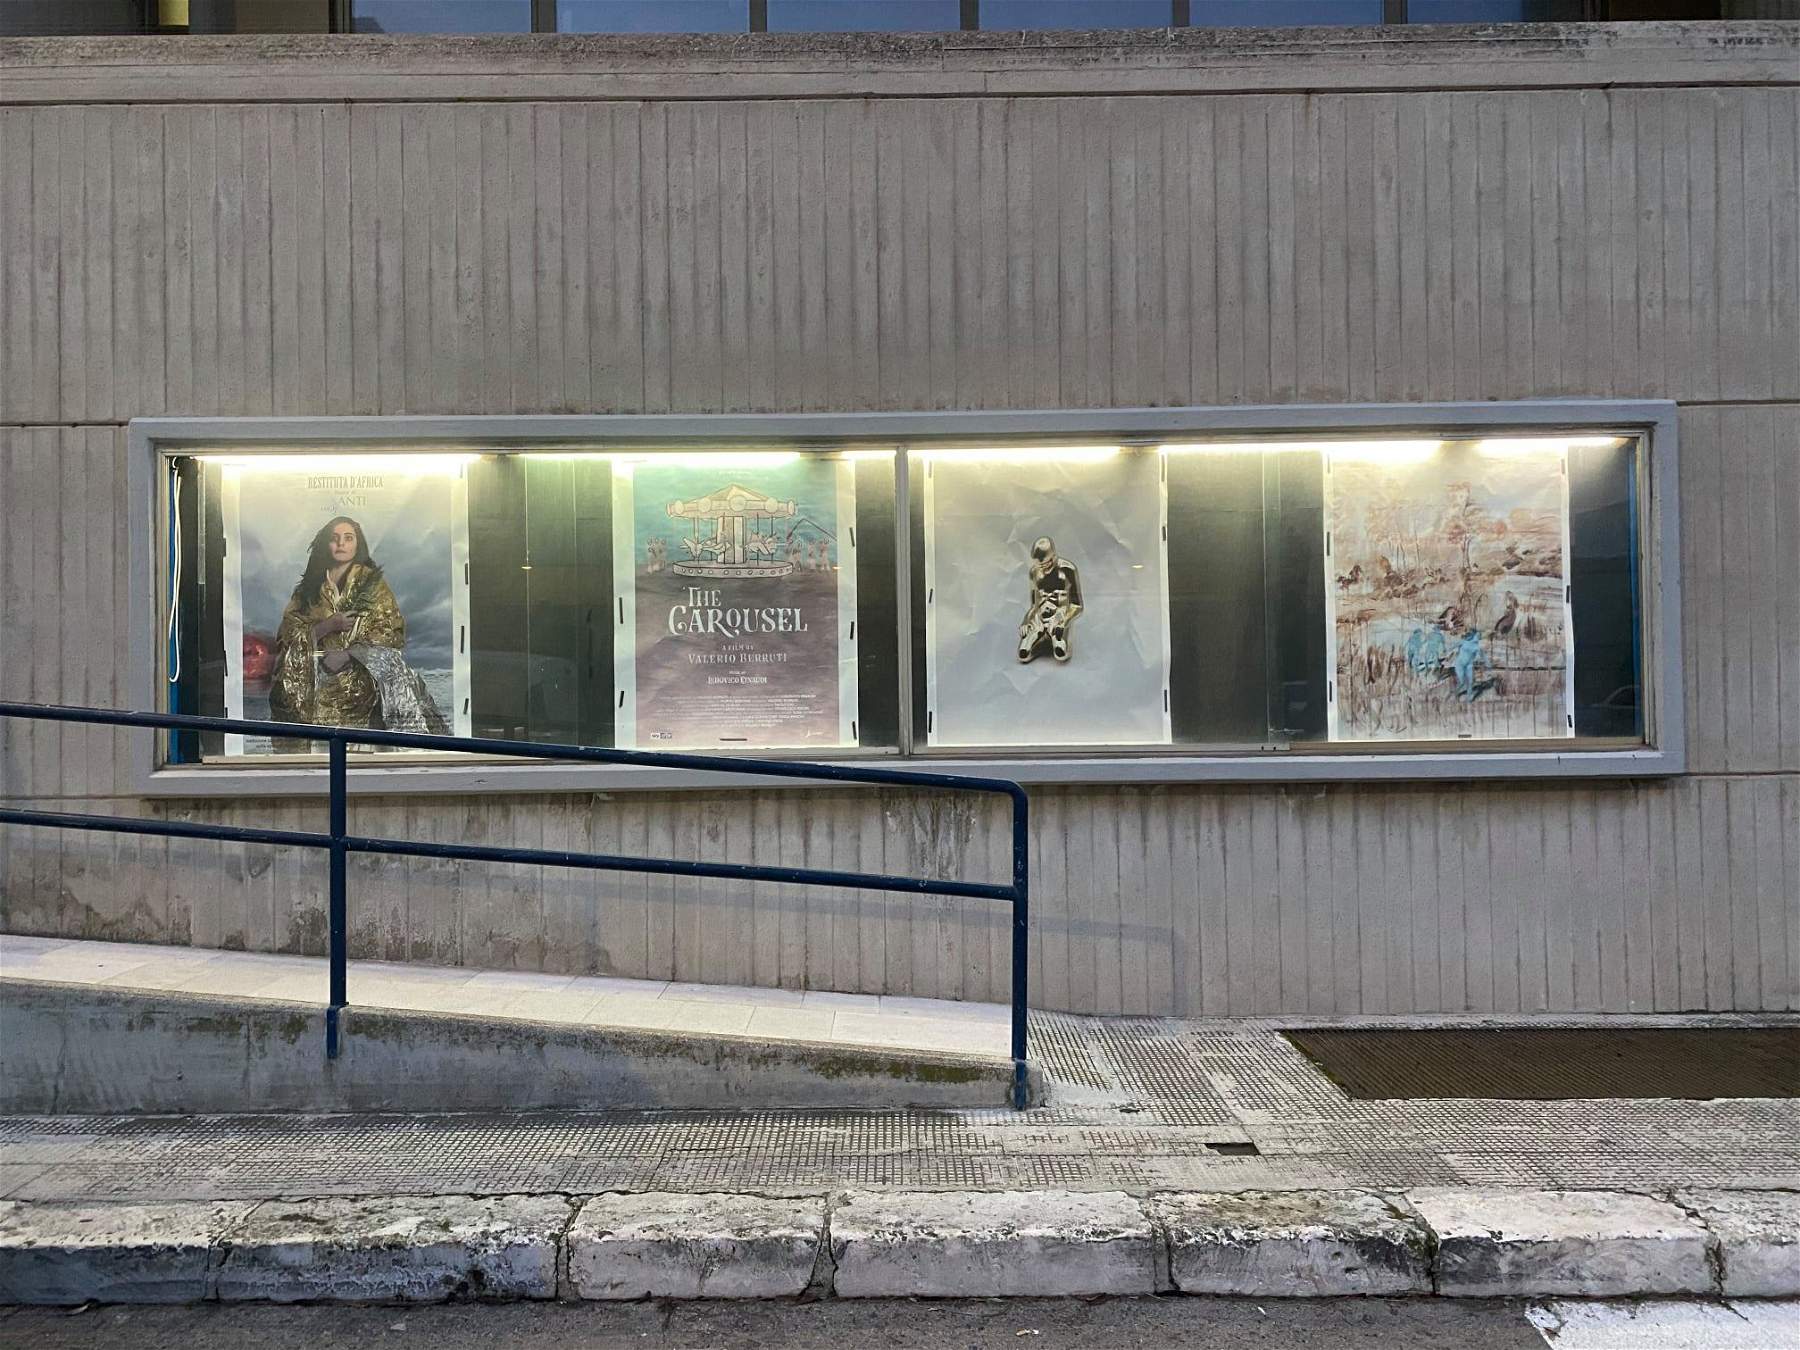 Cinemas closed for Covid? In Puglia, their bulletin boards host artwork in a widespread exhibition